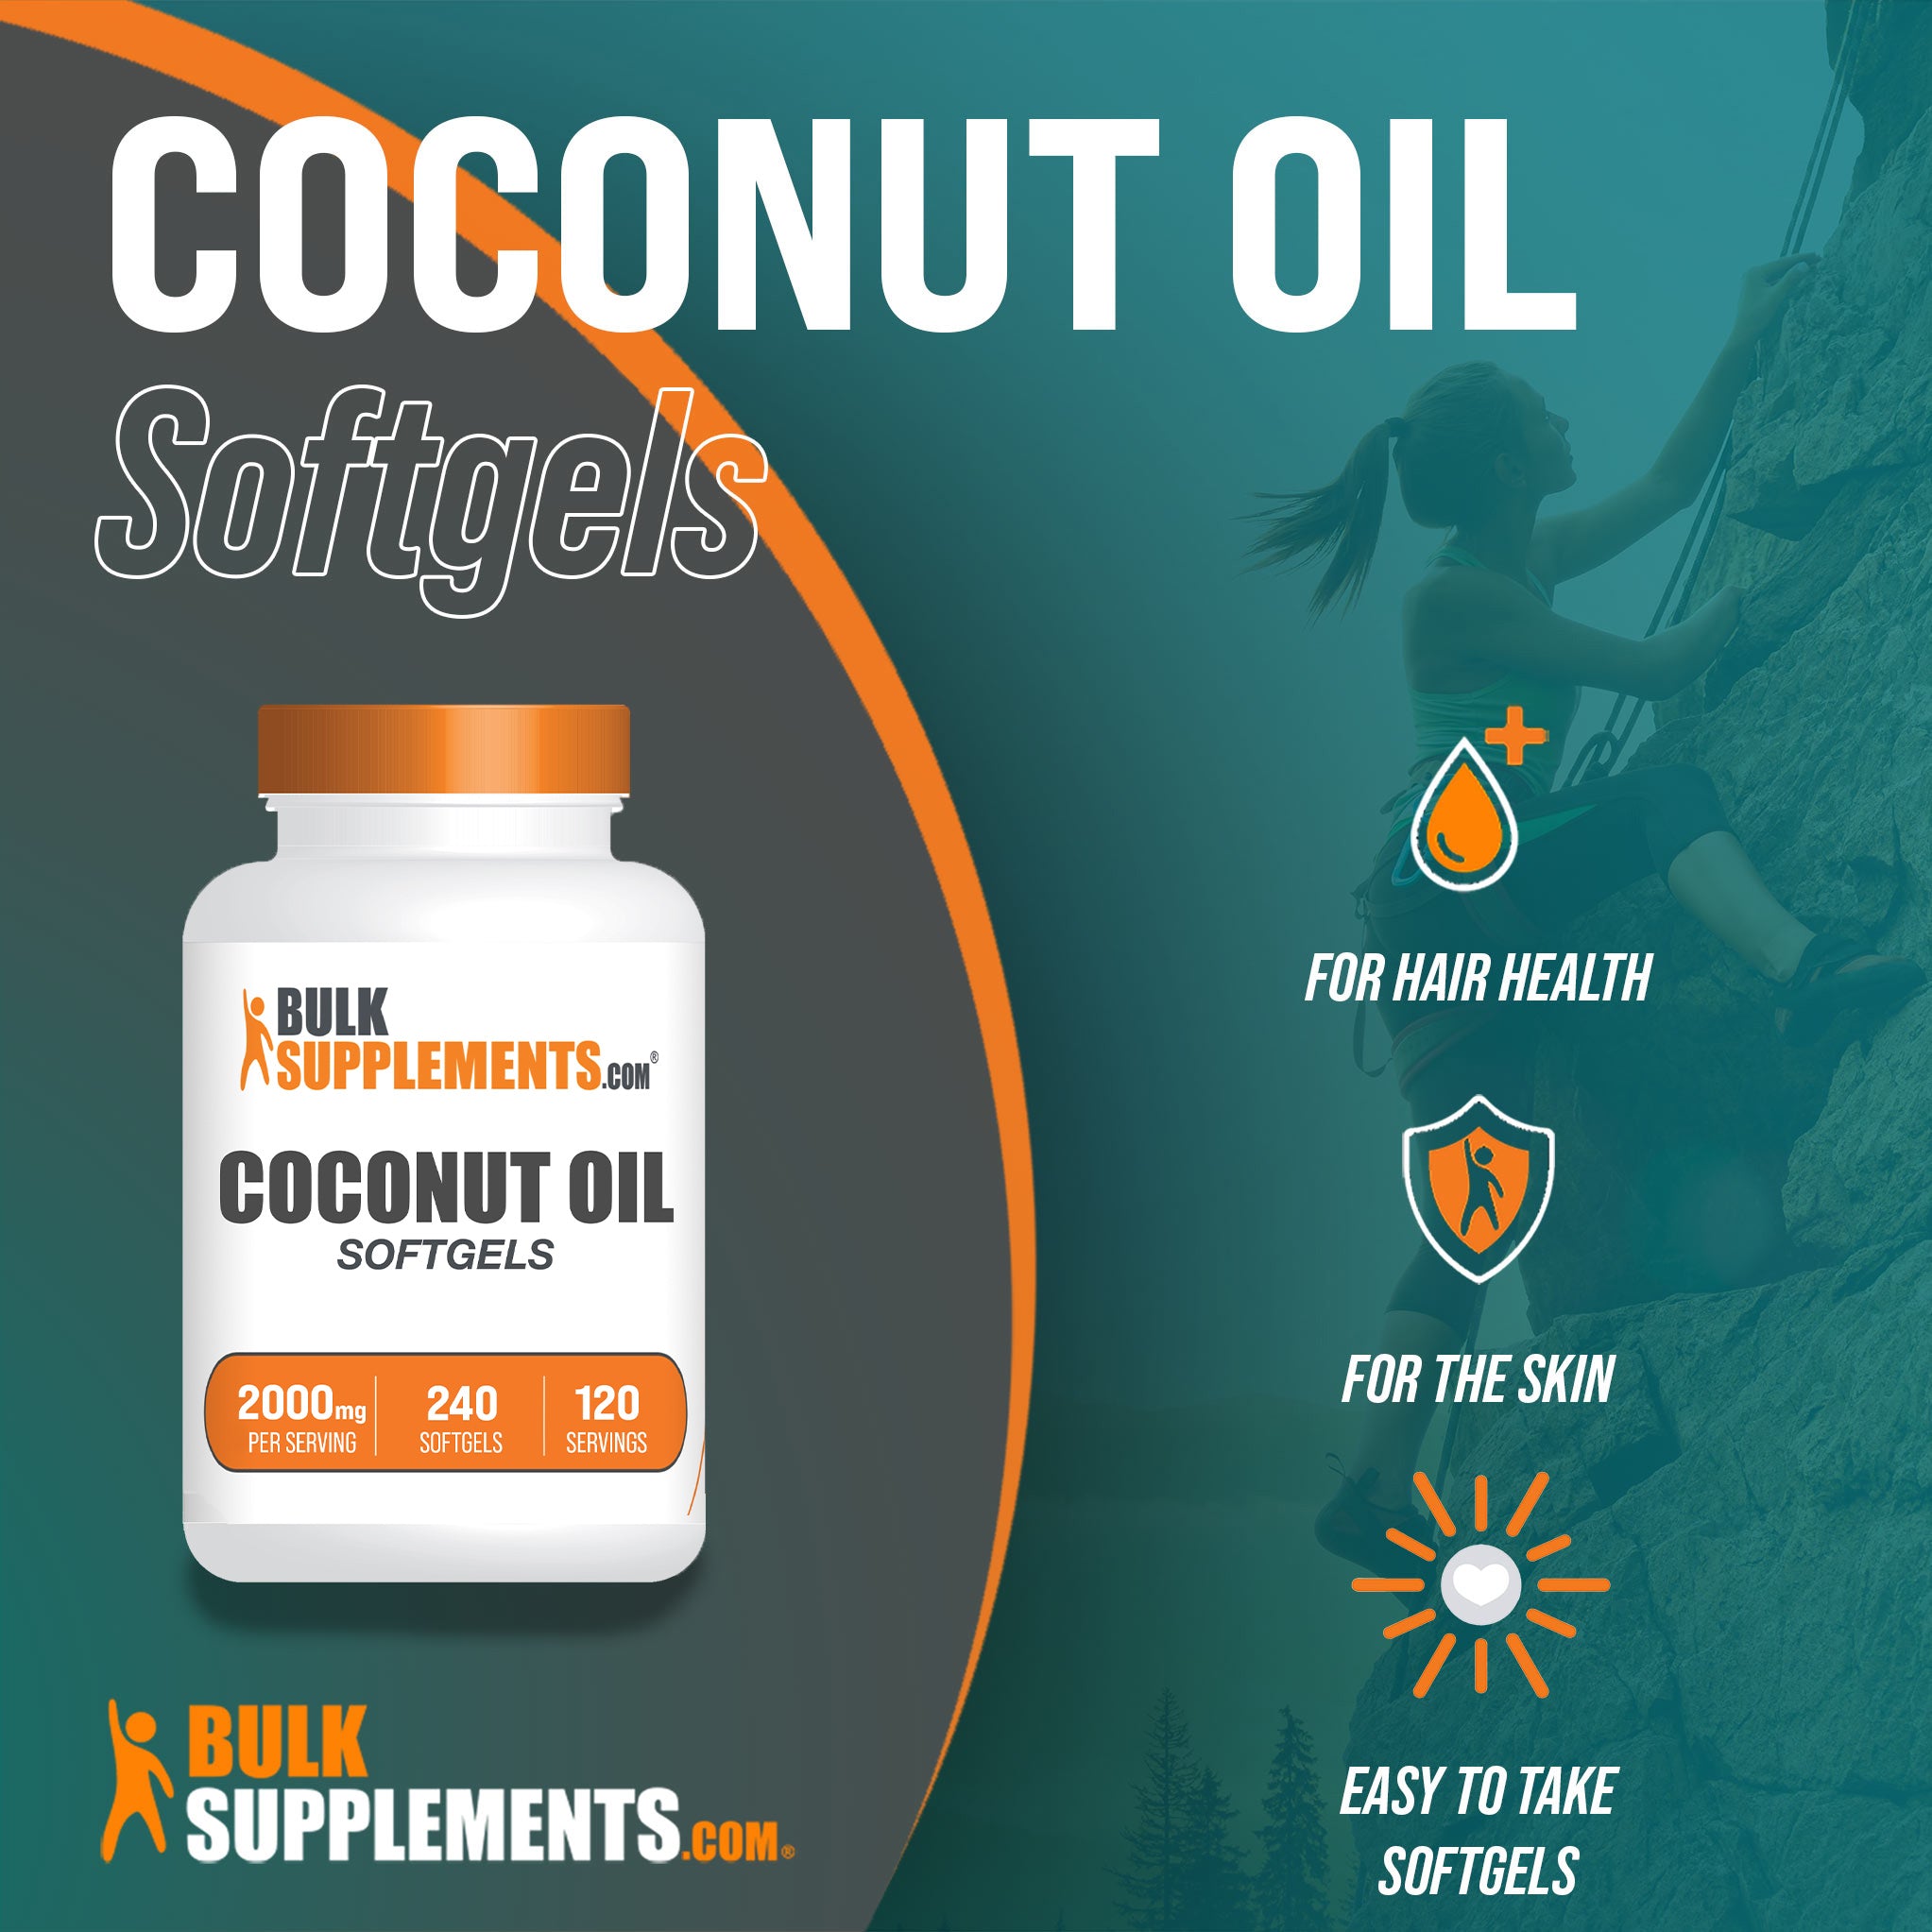 Coconut Oil Softgels 240 ct Main Benefits Image